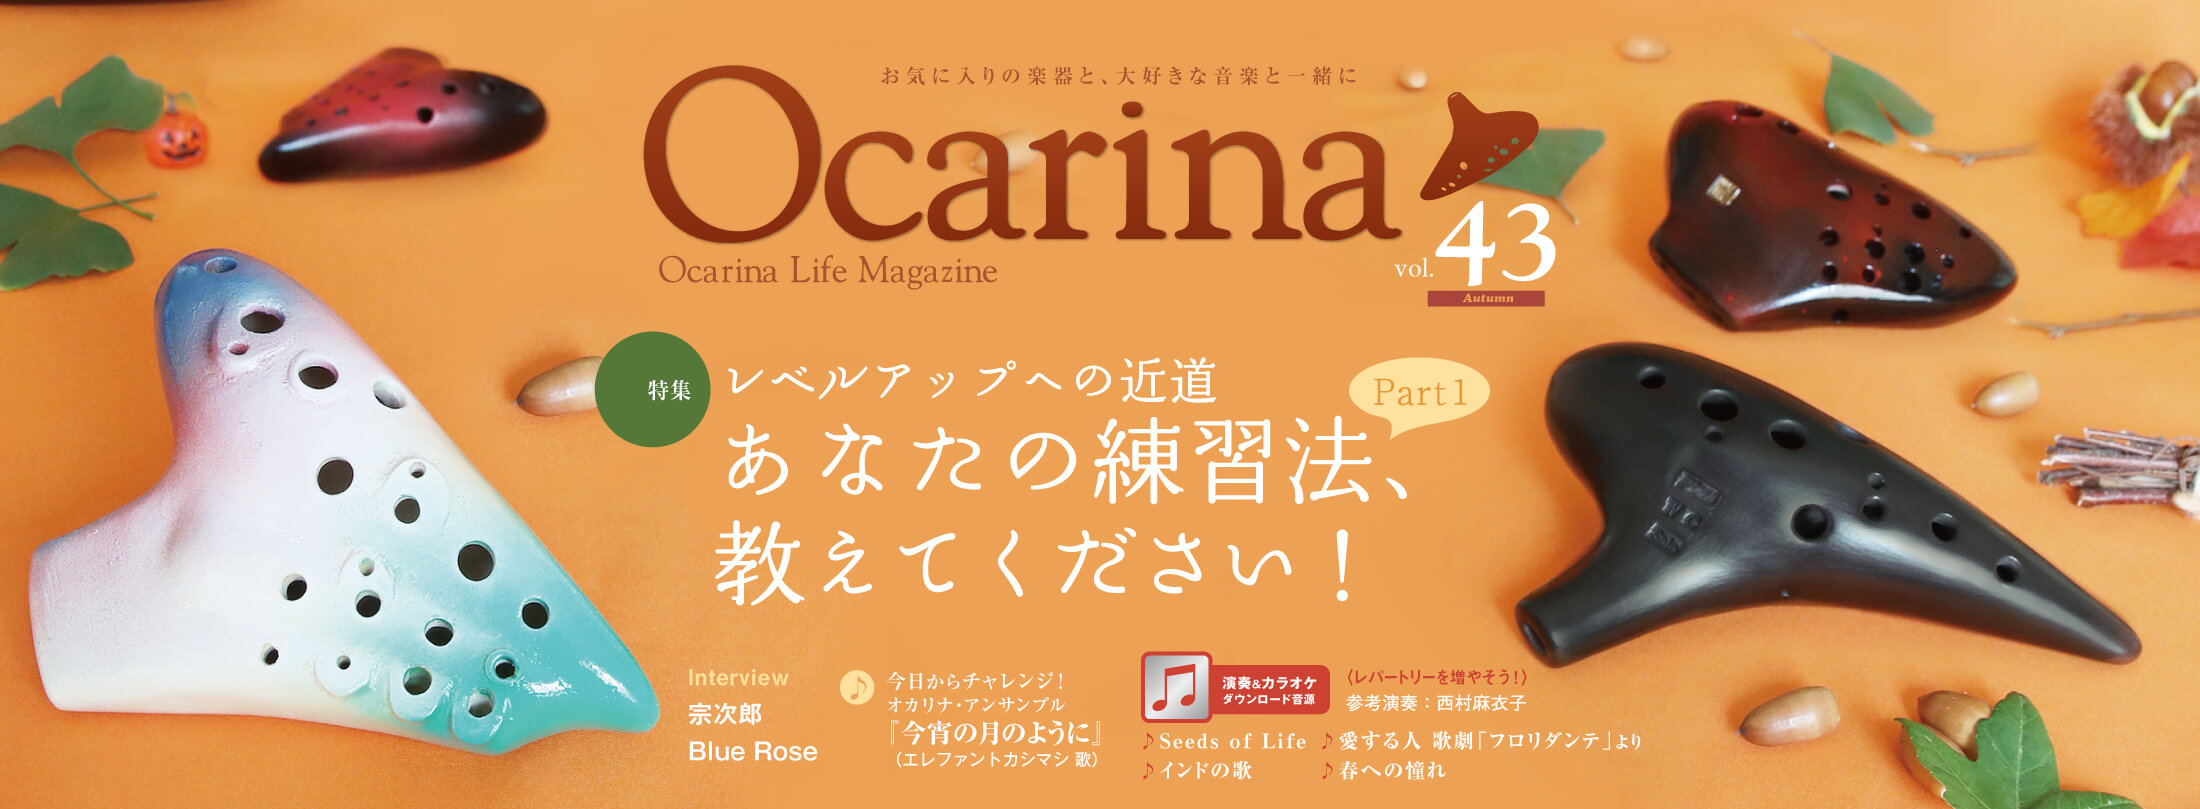 Ocarina 43号